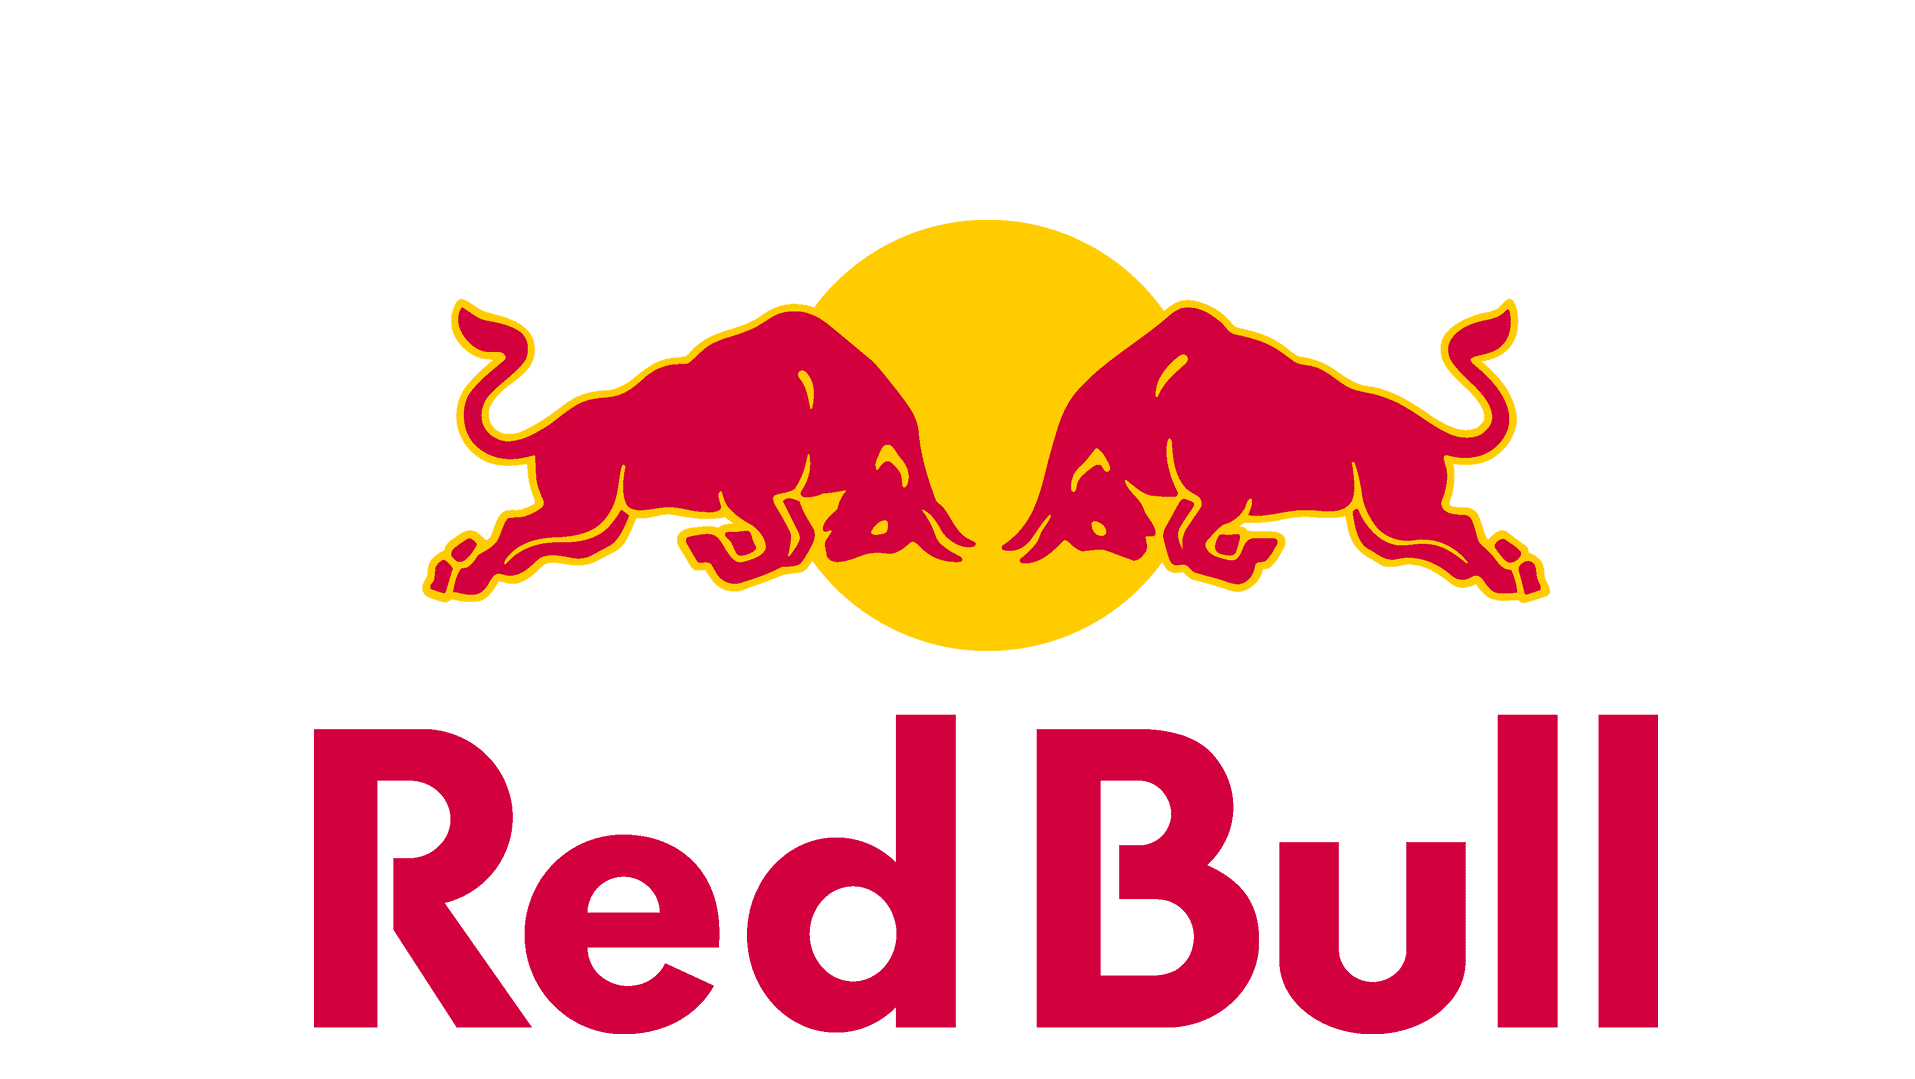 Sponsor tony arbolino, Red Bull